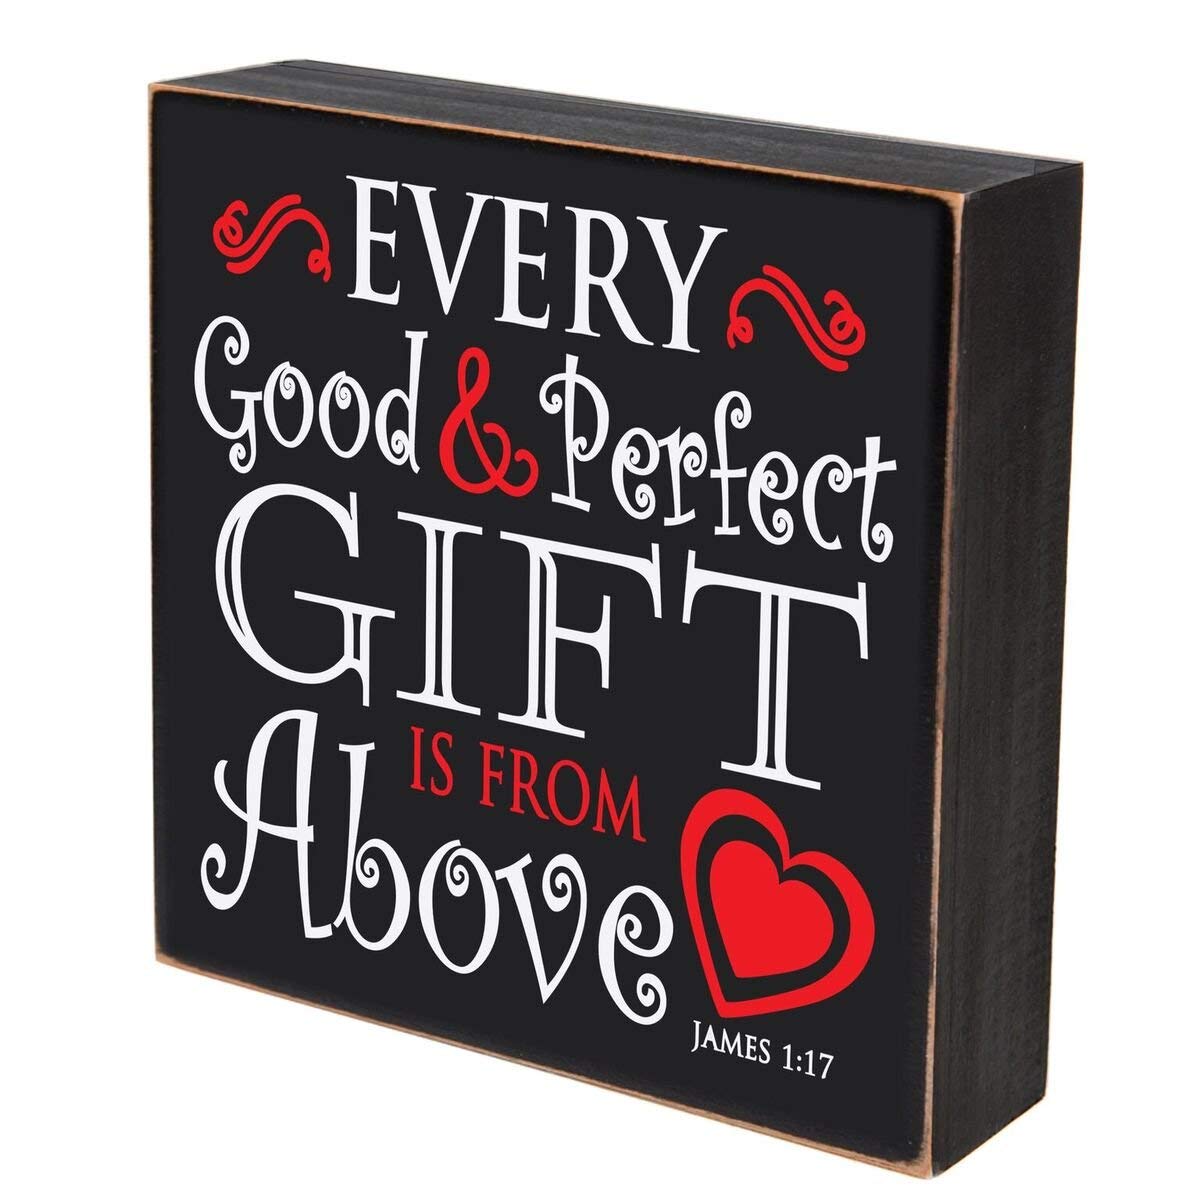 Digitally Printed Shadow Box Wall Decor - Every Good & Perfect Gift - LifeSong Milestones